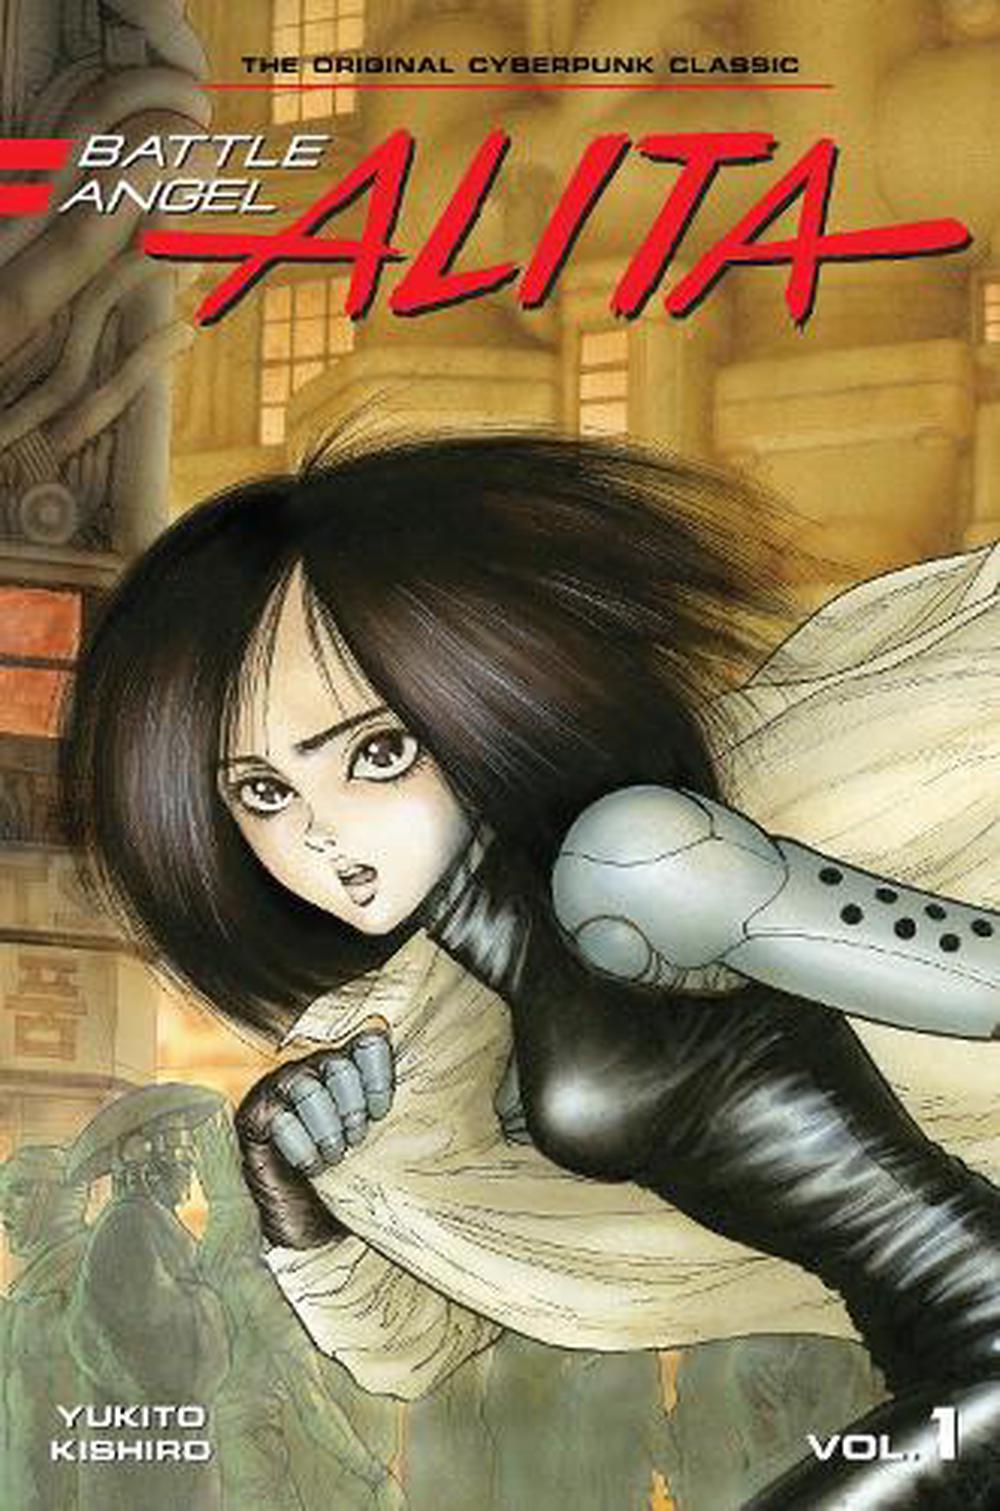 Battle Angel Alita 1 (paperback) by Yukito Kishiro, Paperback,  9781646512546 | Buy online at The Nile